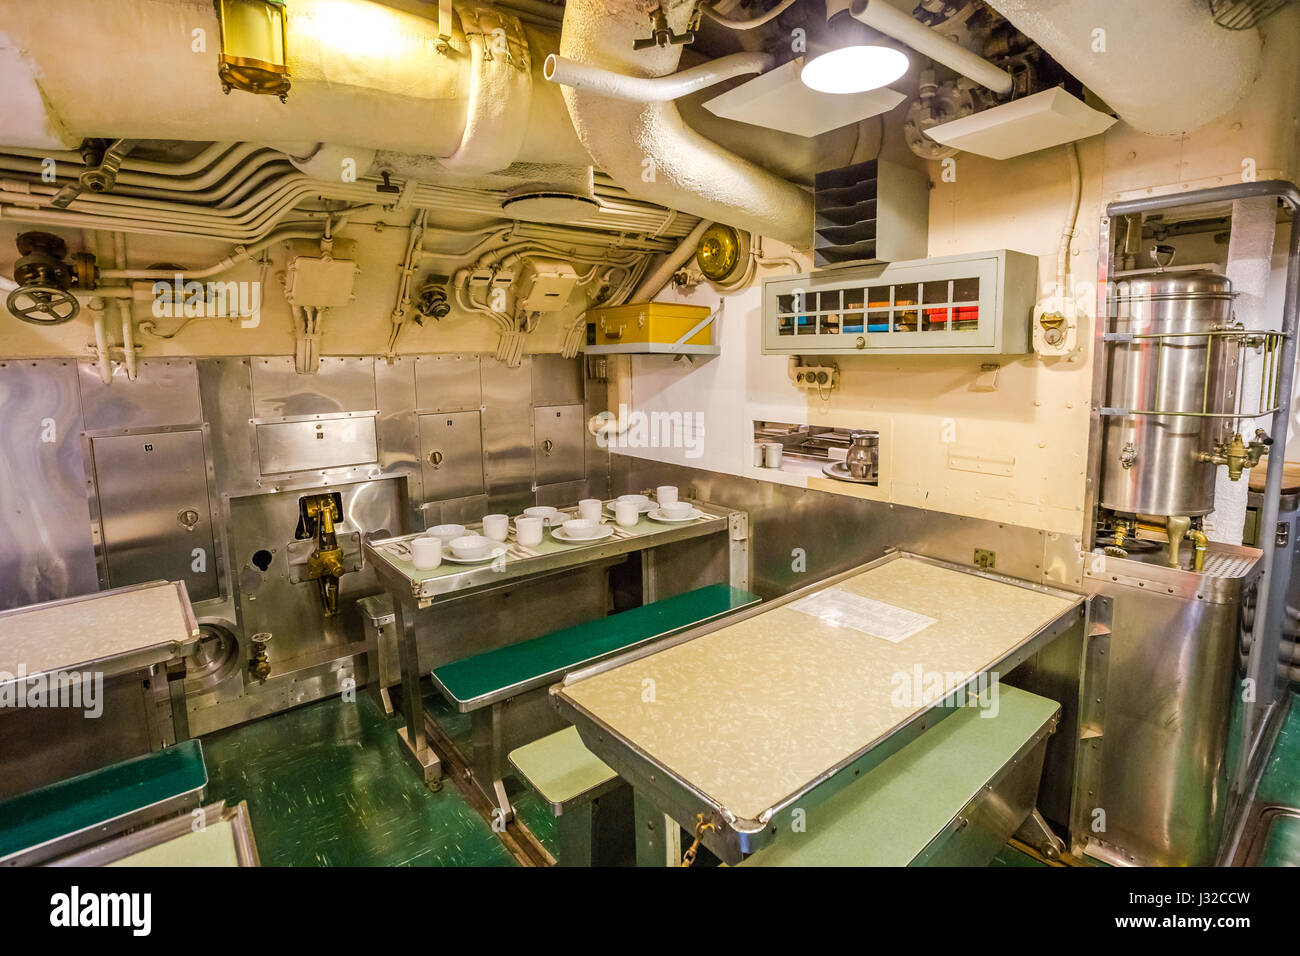 submarine officers dining room